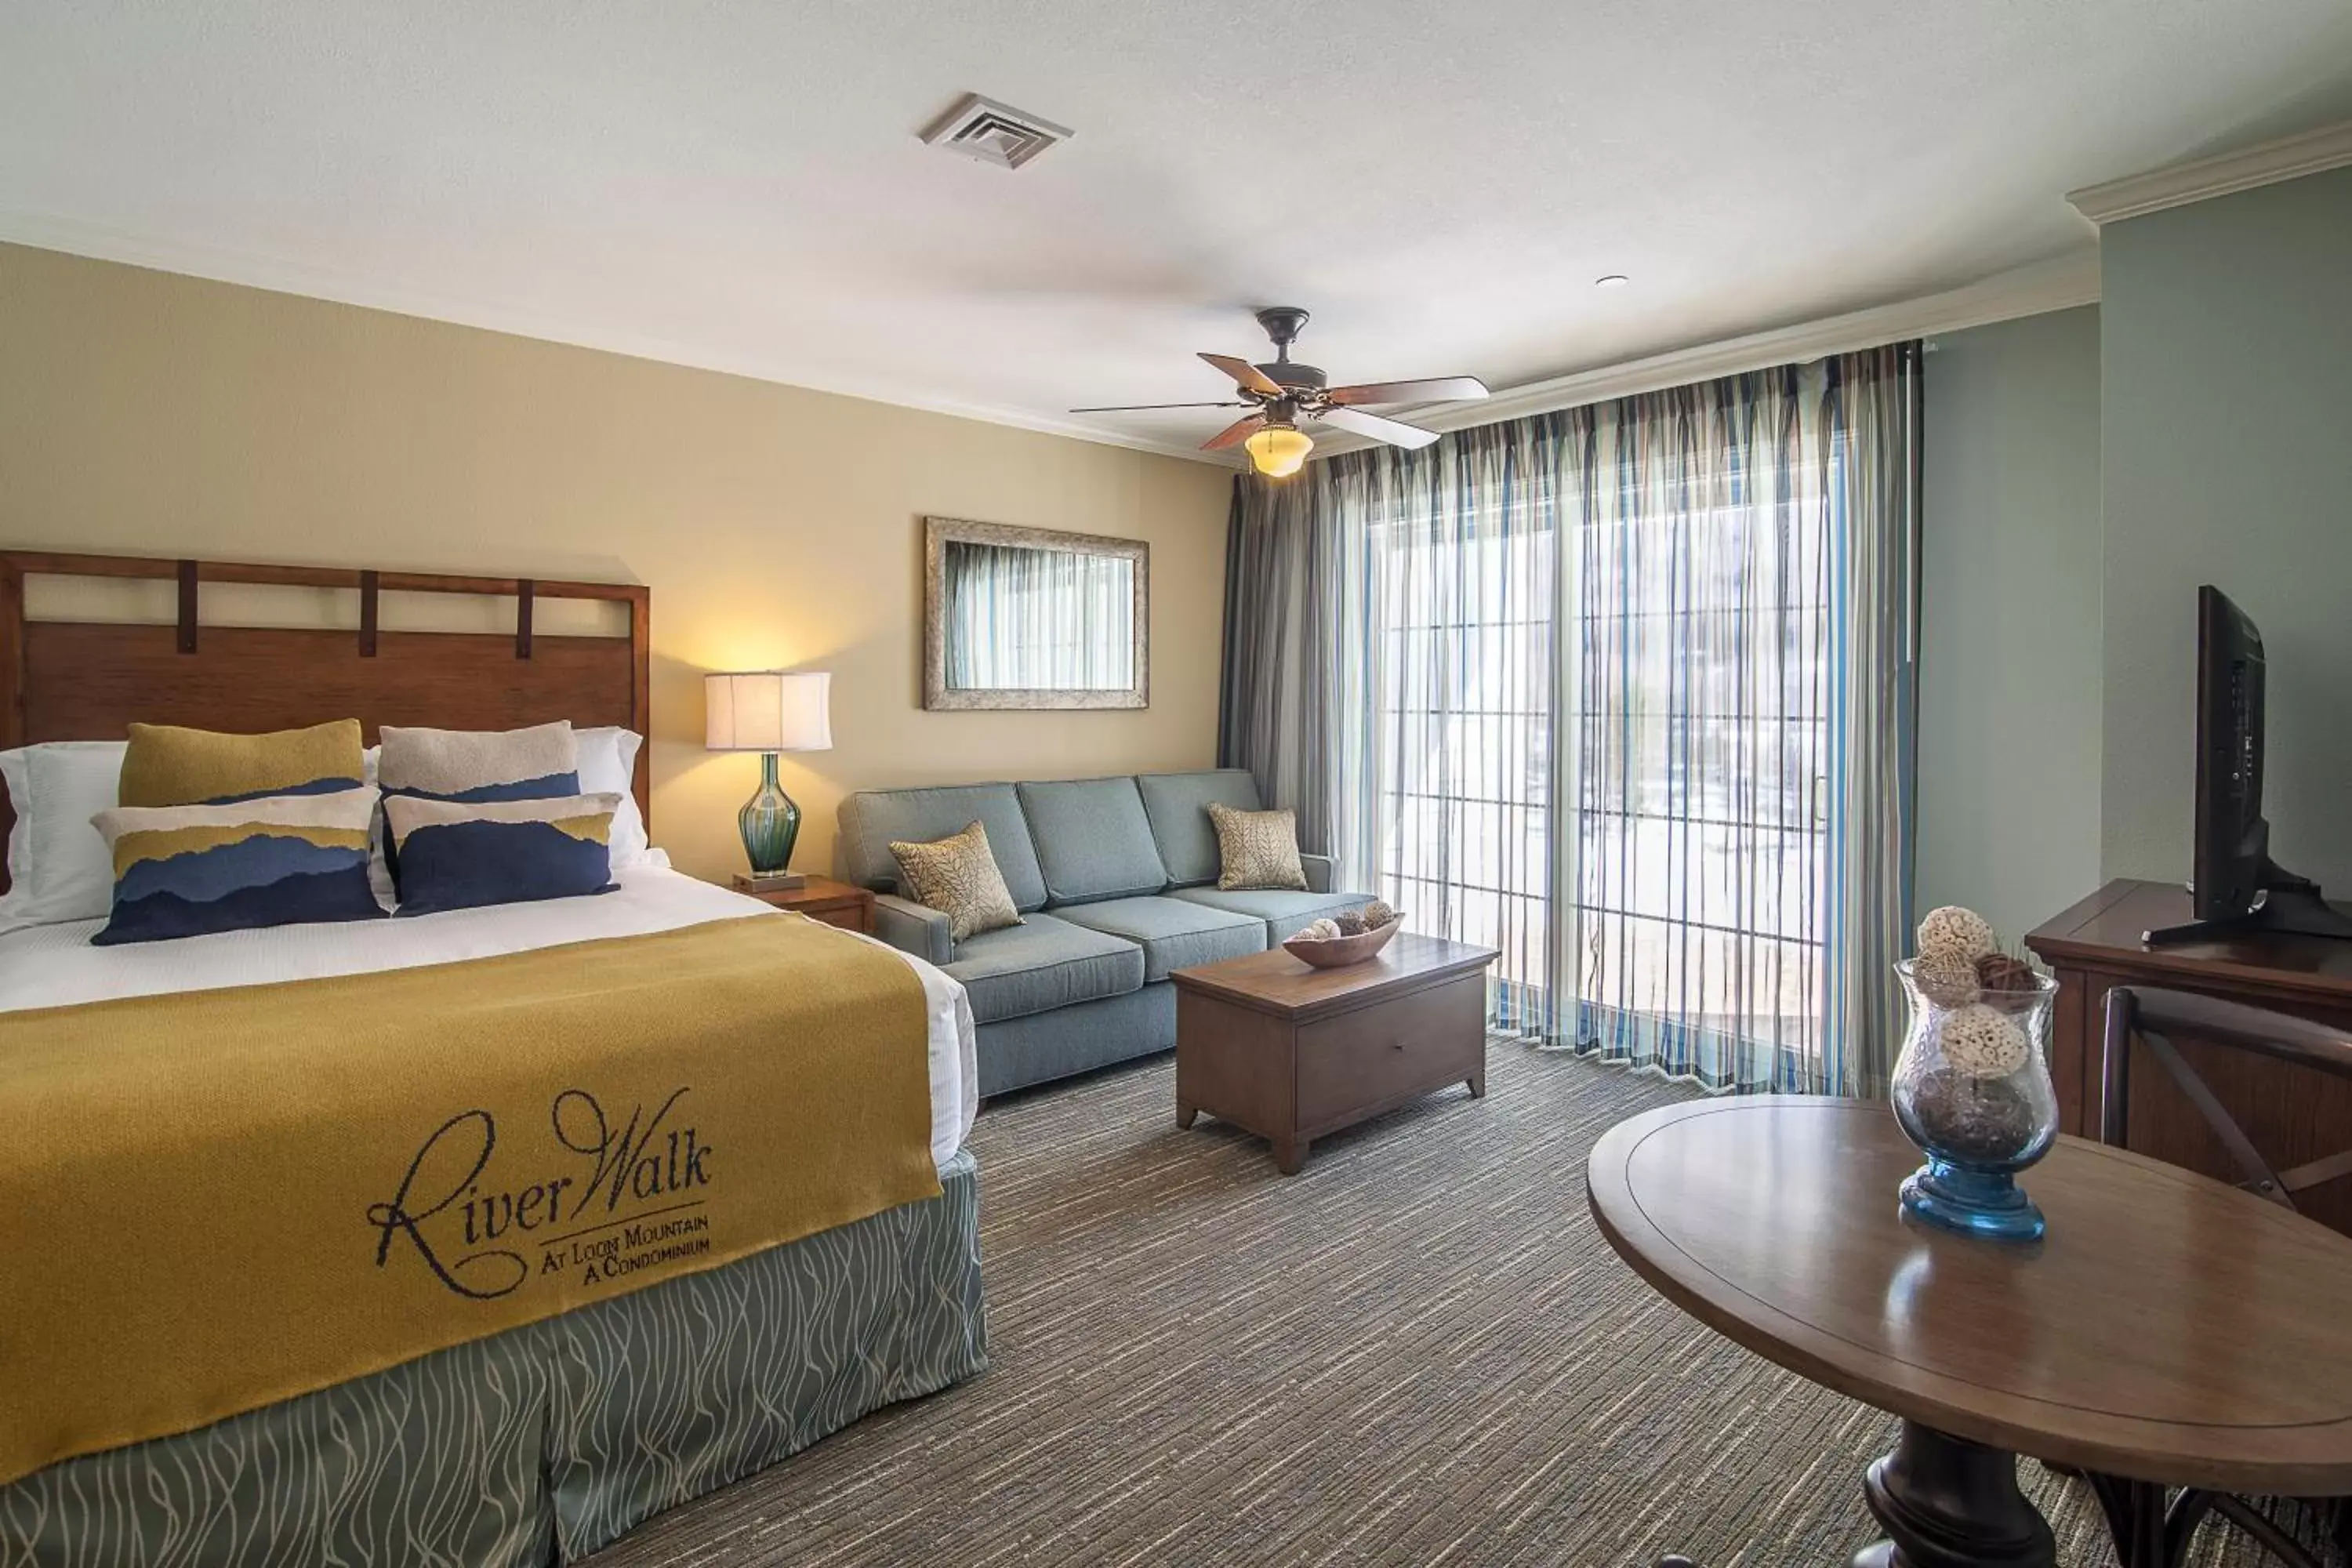 Bed, Room Photo in RiverWalk Resort at Loon Mountain